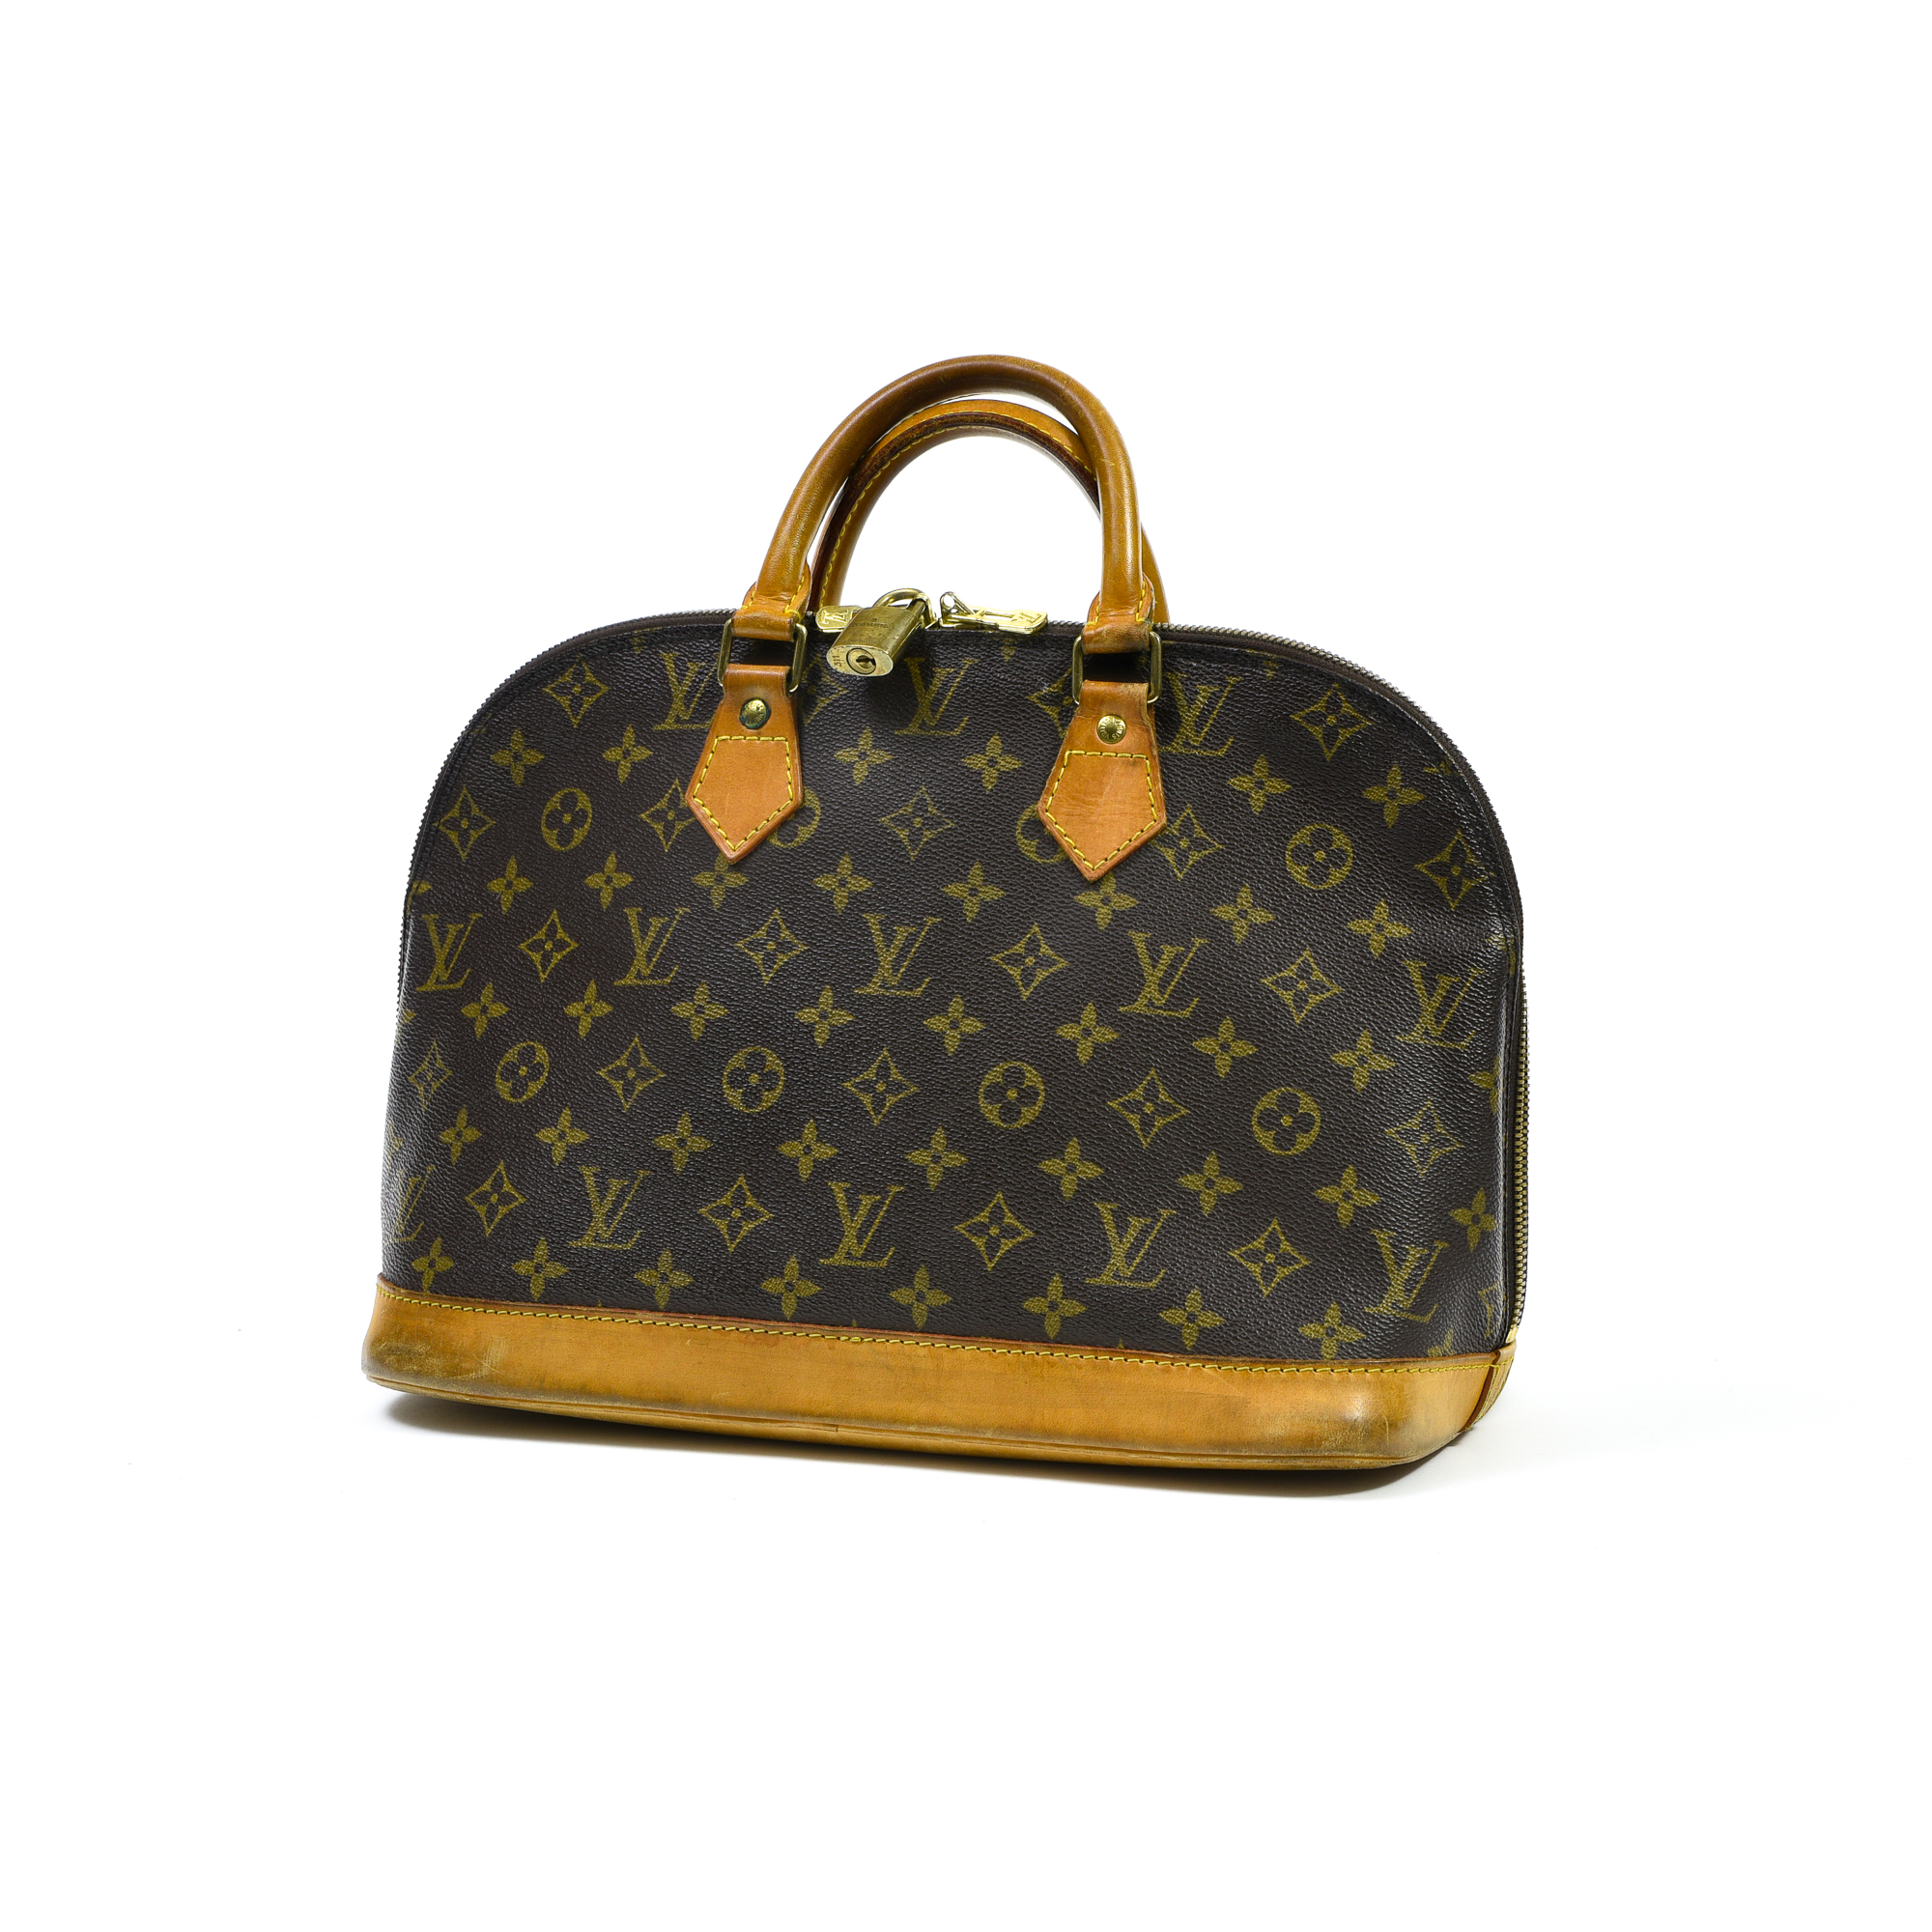 Louis Vuitton "Alma" handbag Monogrammed canvas and natural leather, zipper closure, double